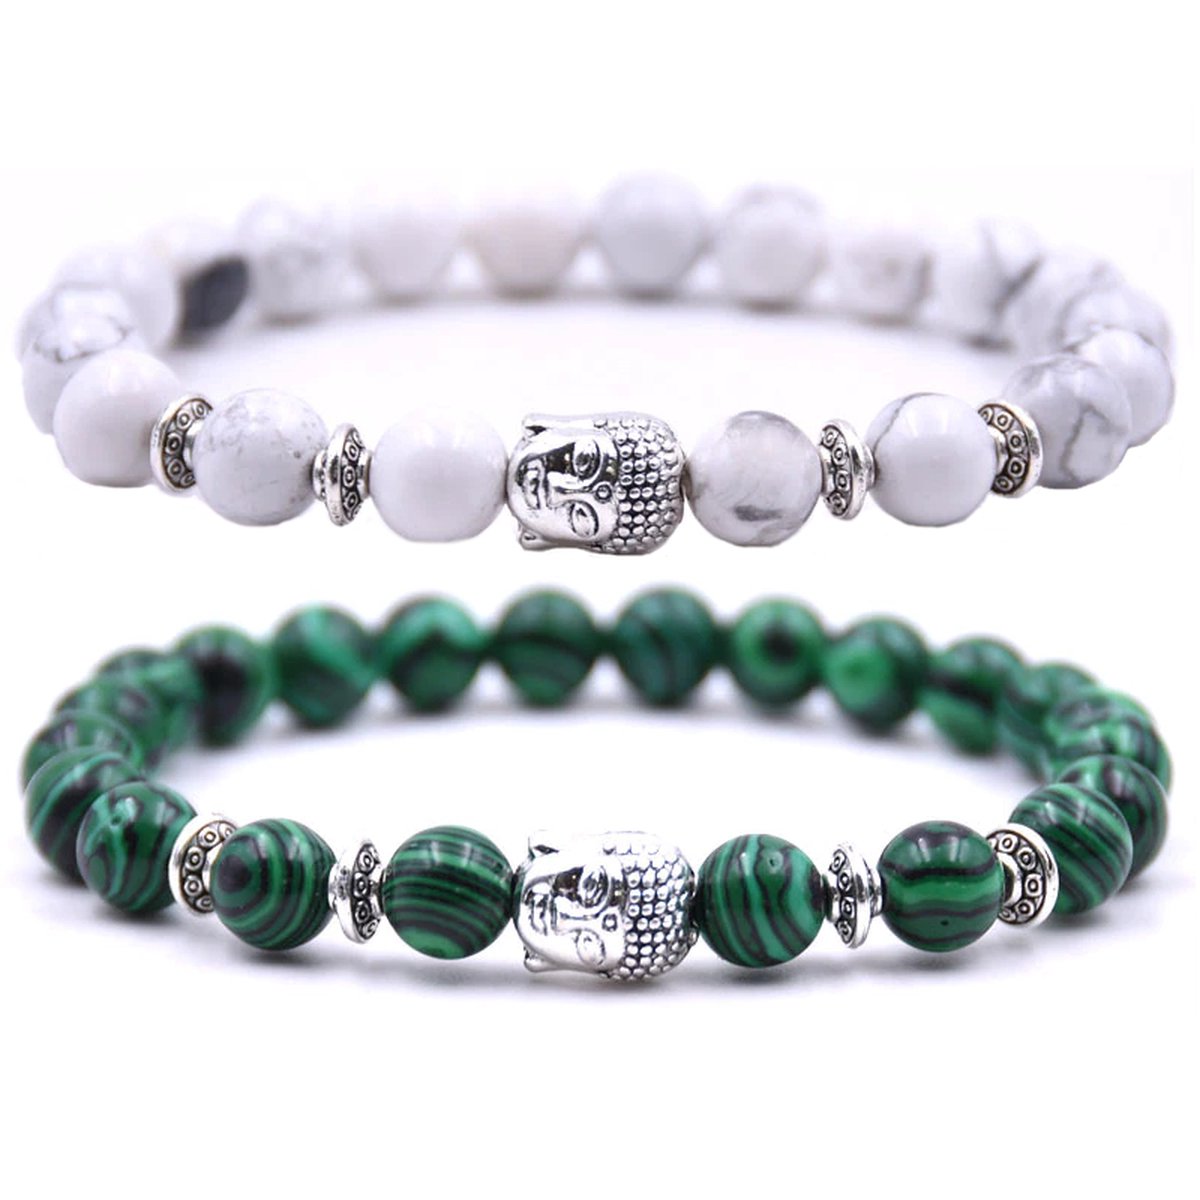 Armband heren / dames / unisex - met buddha bedel - Kralen armband boedha - Chakra armband - Cadeau voor hem of haar - Armbandenset 2 bandjes - Wit marmer & groen